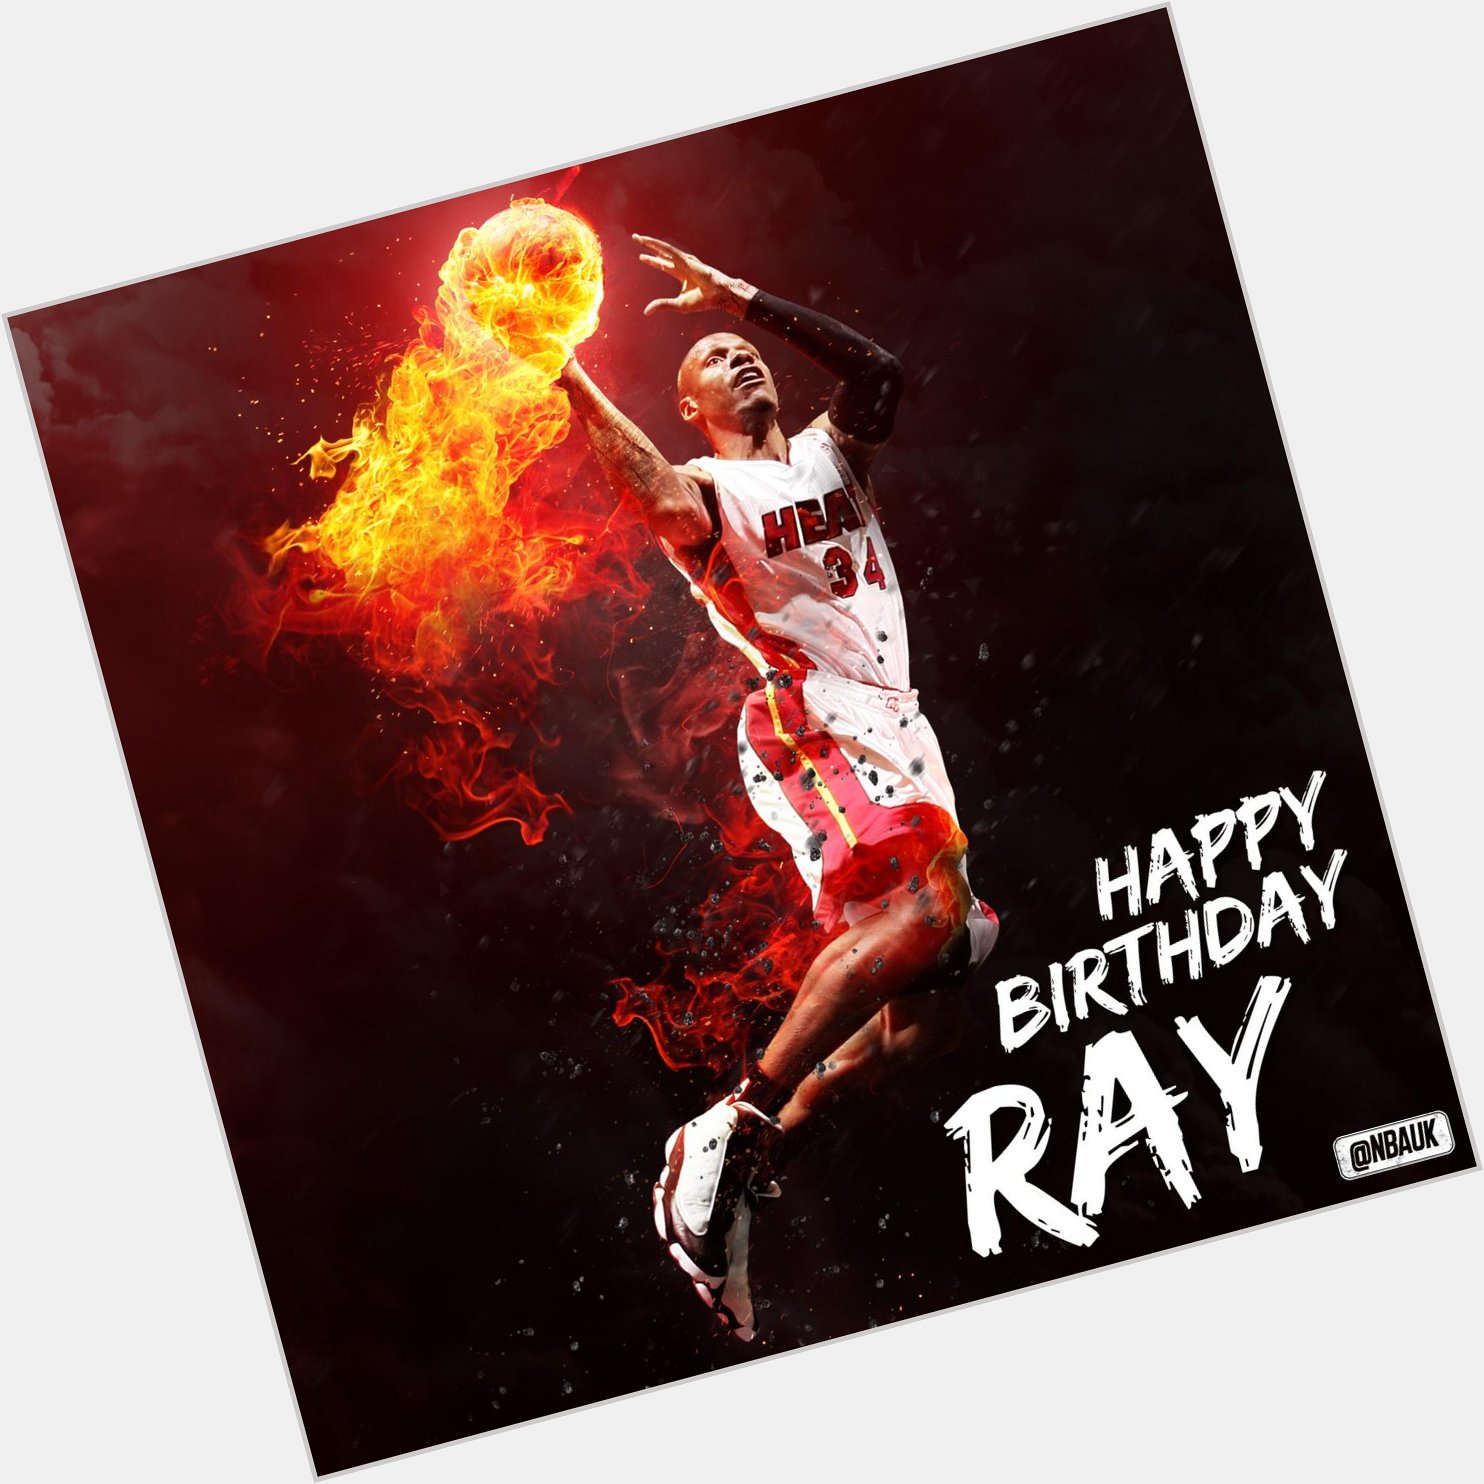 Happy birthday Ray Allen! 